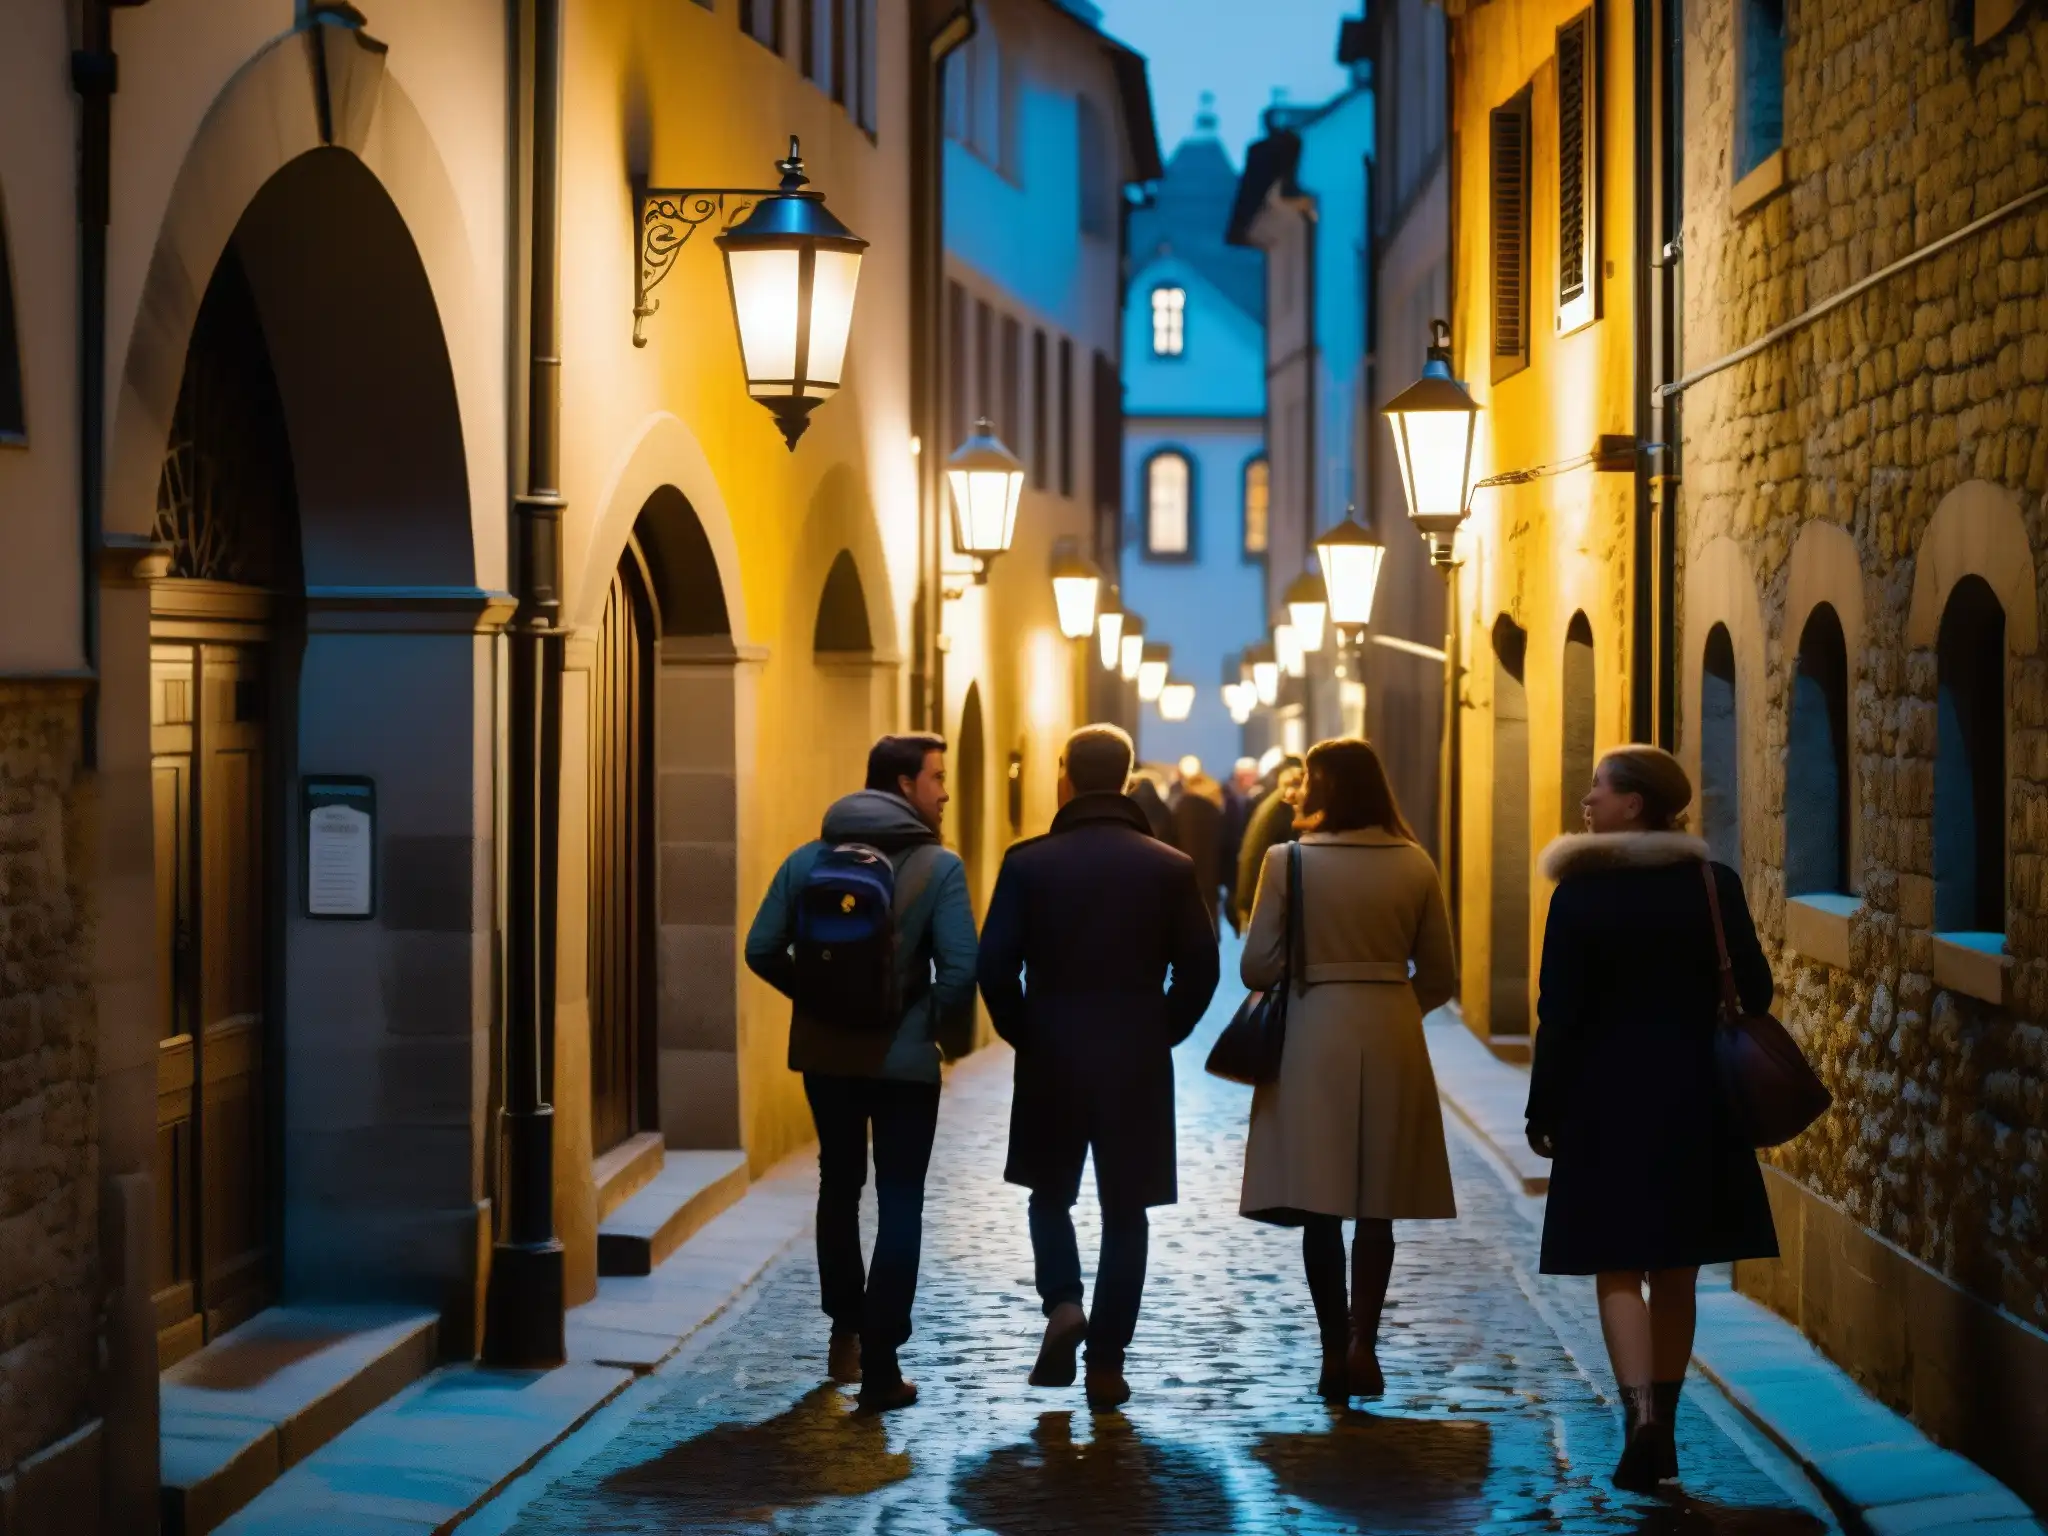 Grupo de turistas escuchando leyenda urbana en callejón europeo, impacto del turismo en folklore